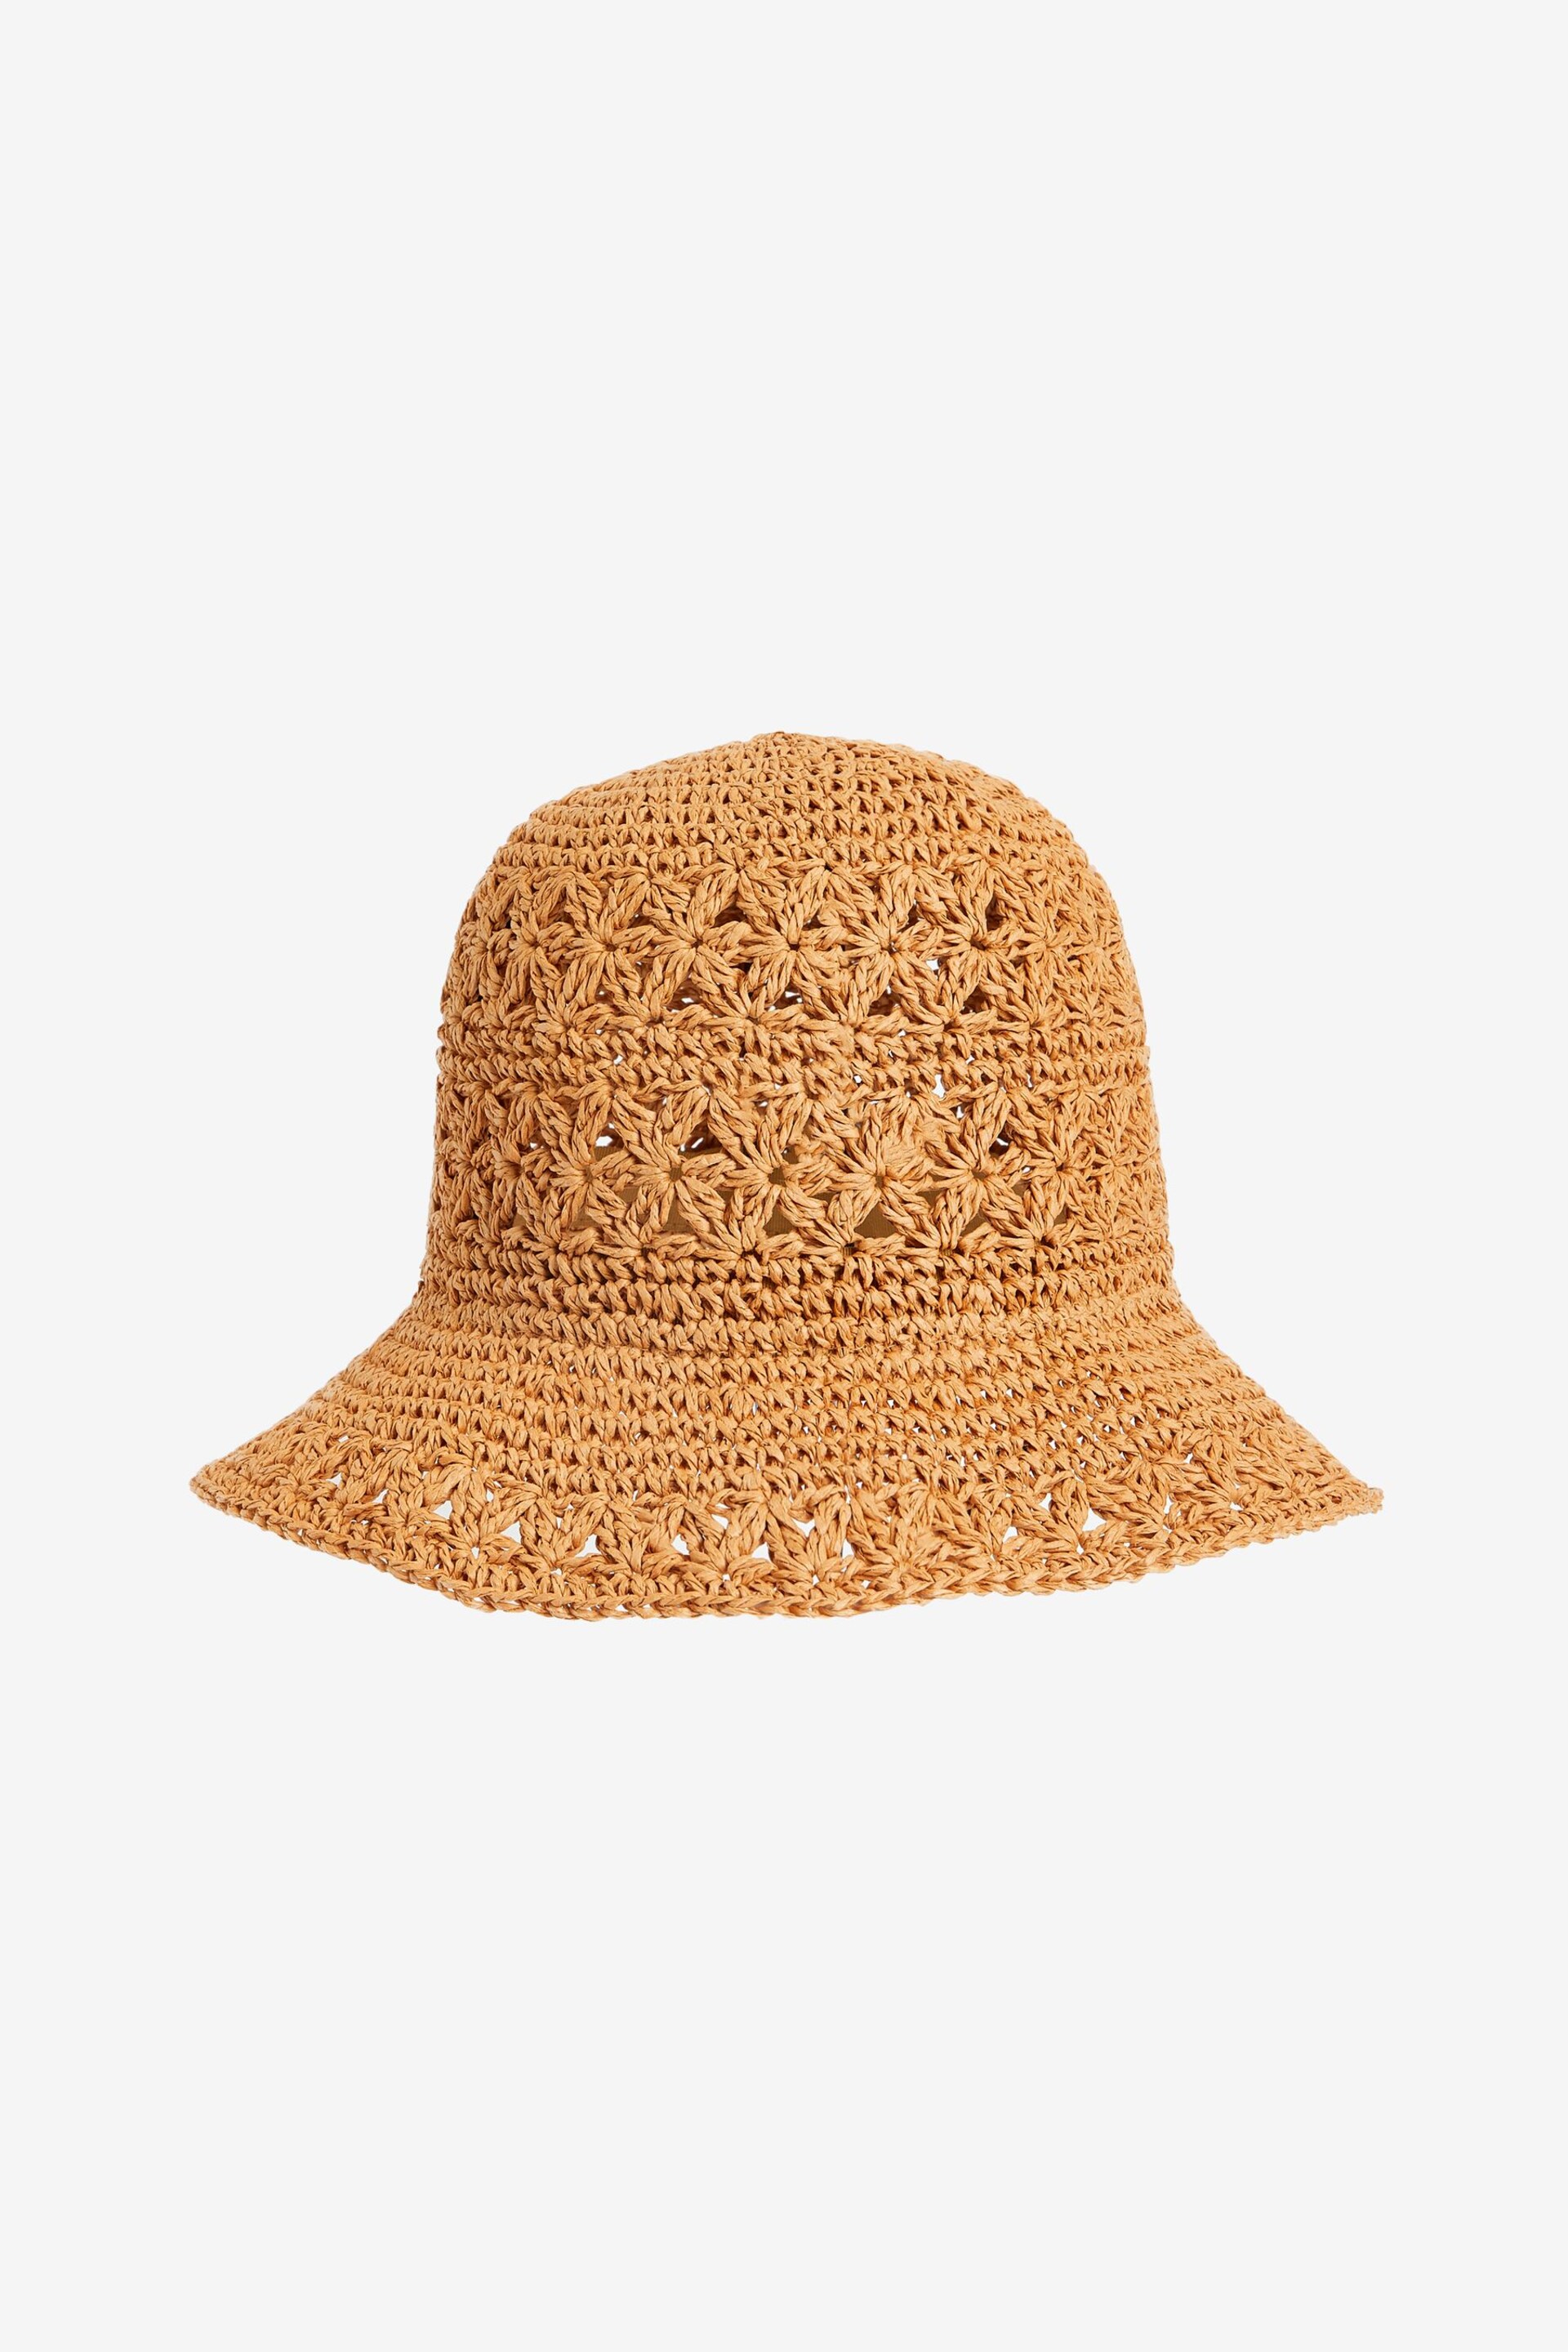 Natural Crochet Bucket Hat - Image 4 of 4